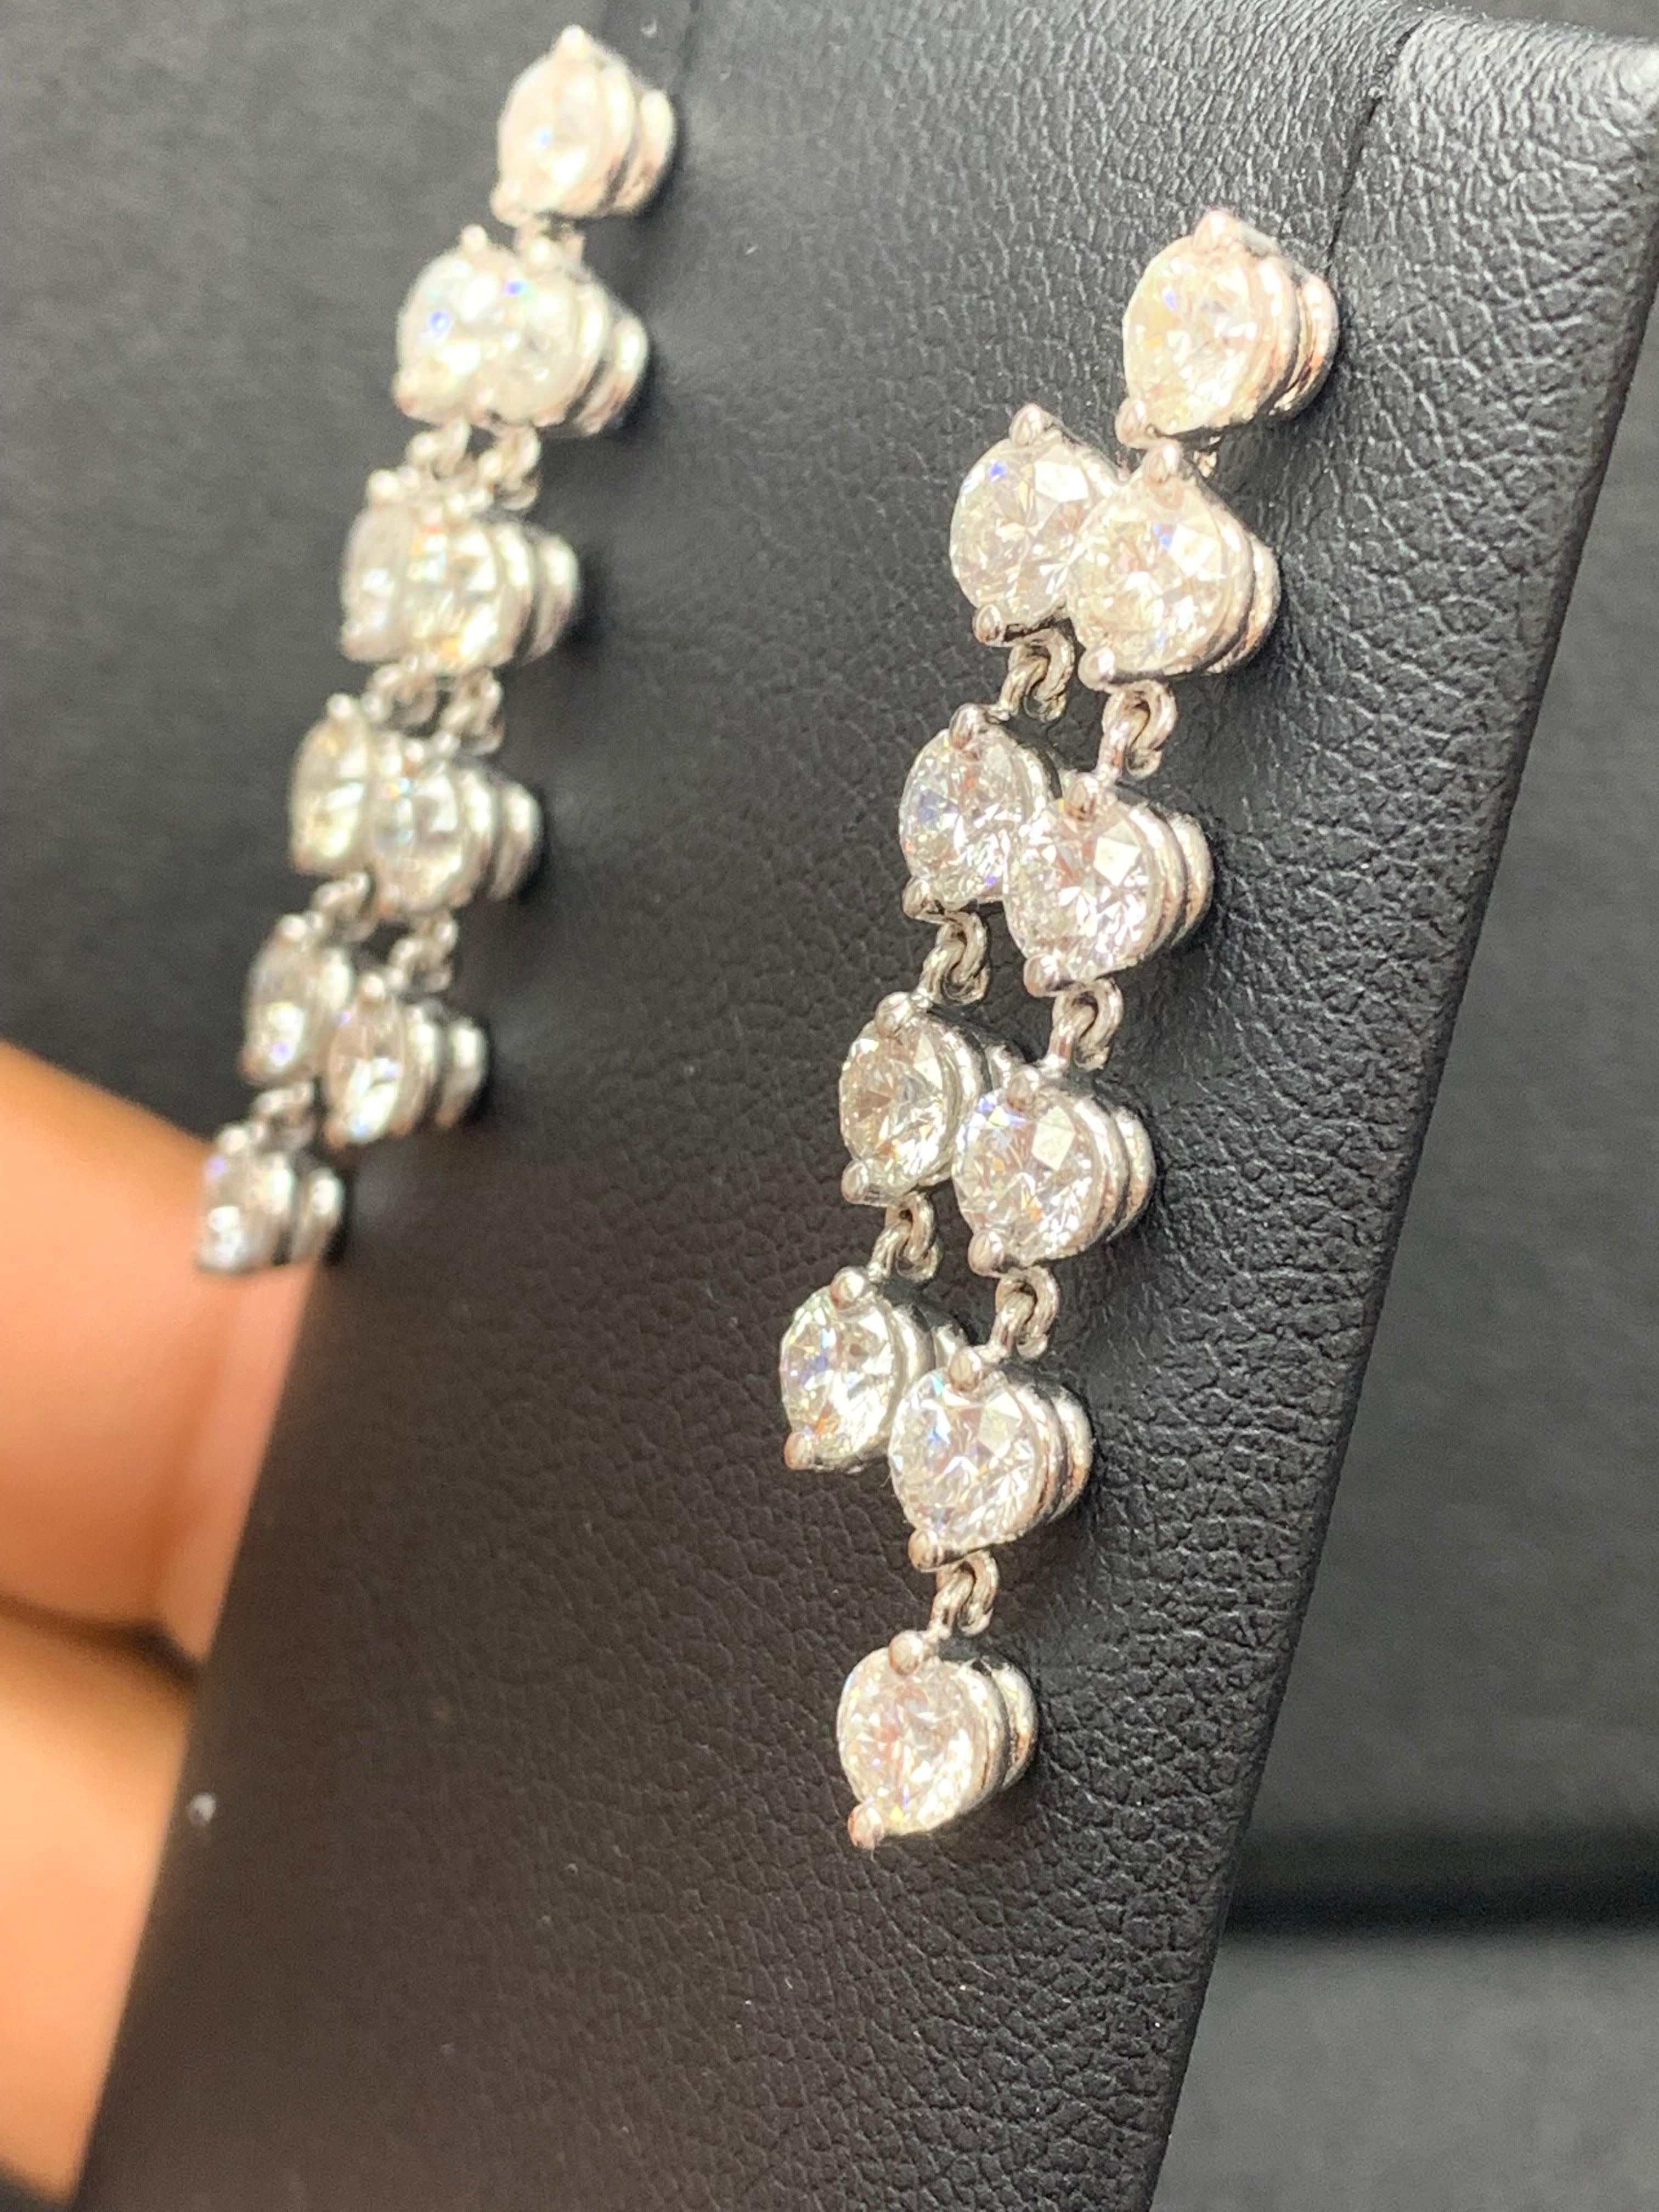 Round Cut 5.01 Carat Diamond Chandelier Earrings in 14k White Gold For Sale